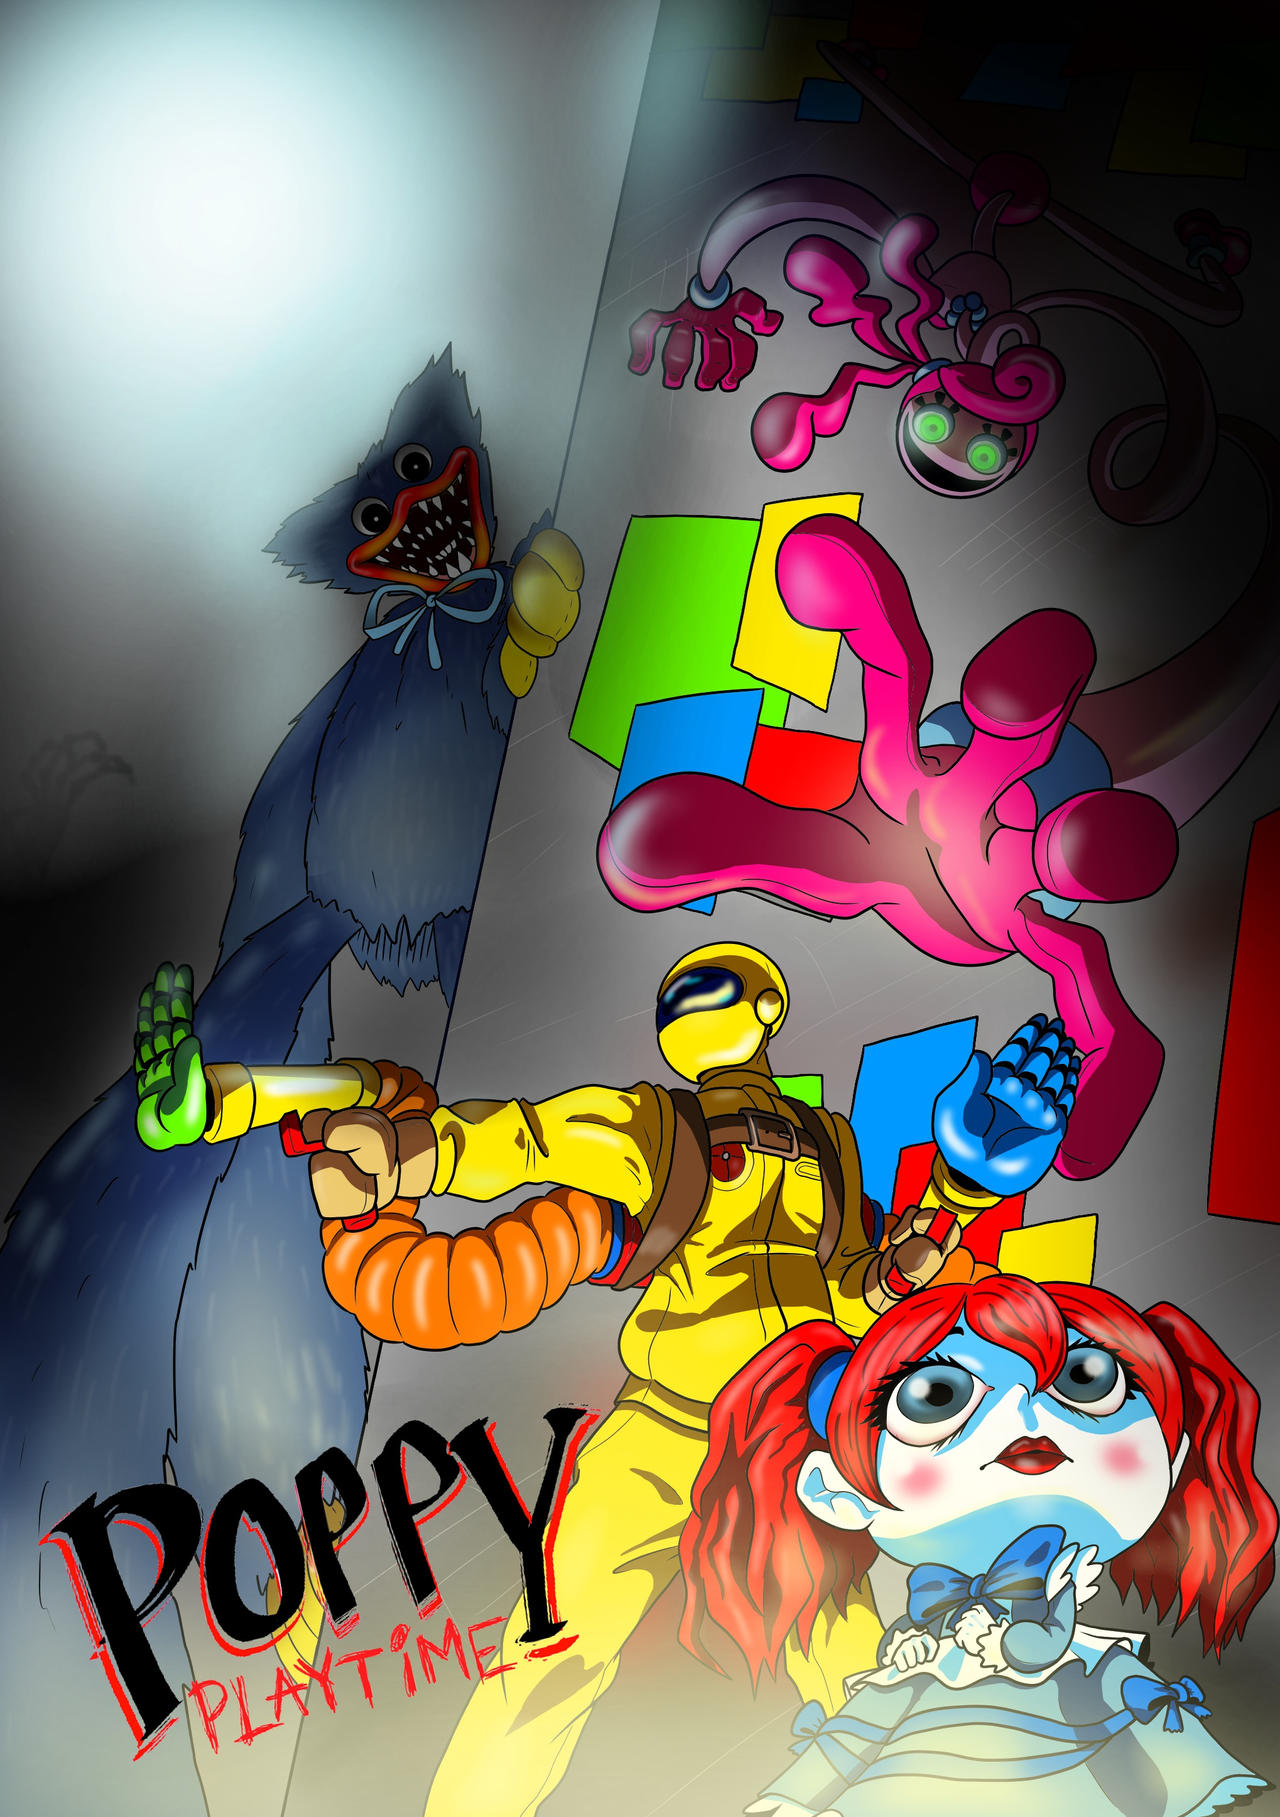 Poppy Playtime Chapter 1 Poster by johnmc0007 on DeviantArt